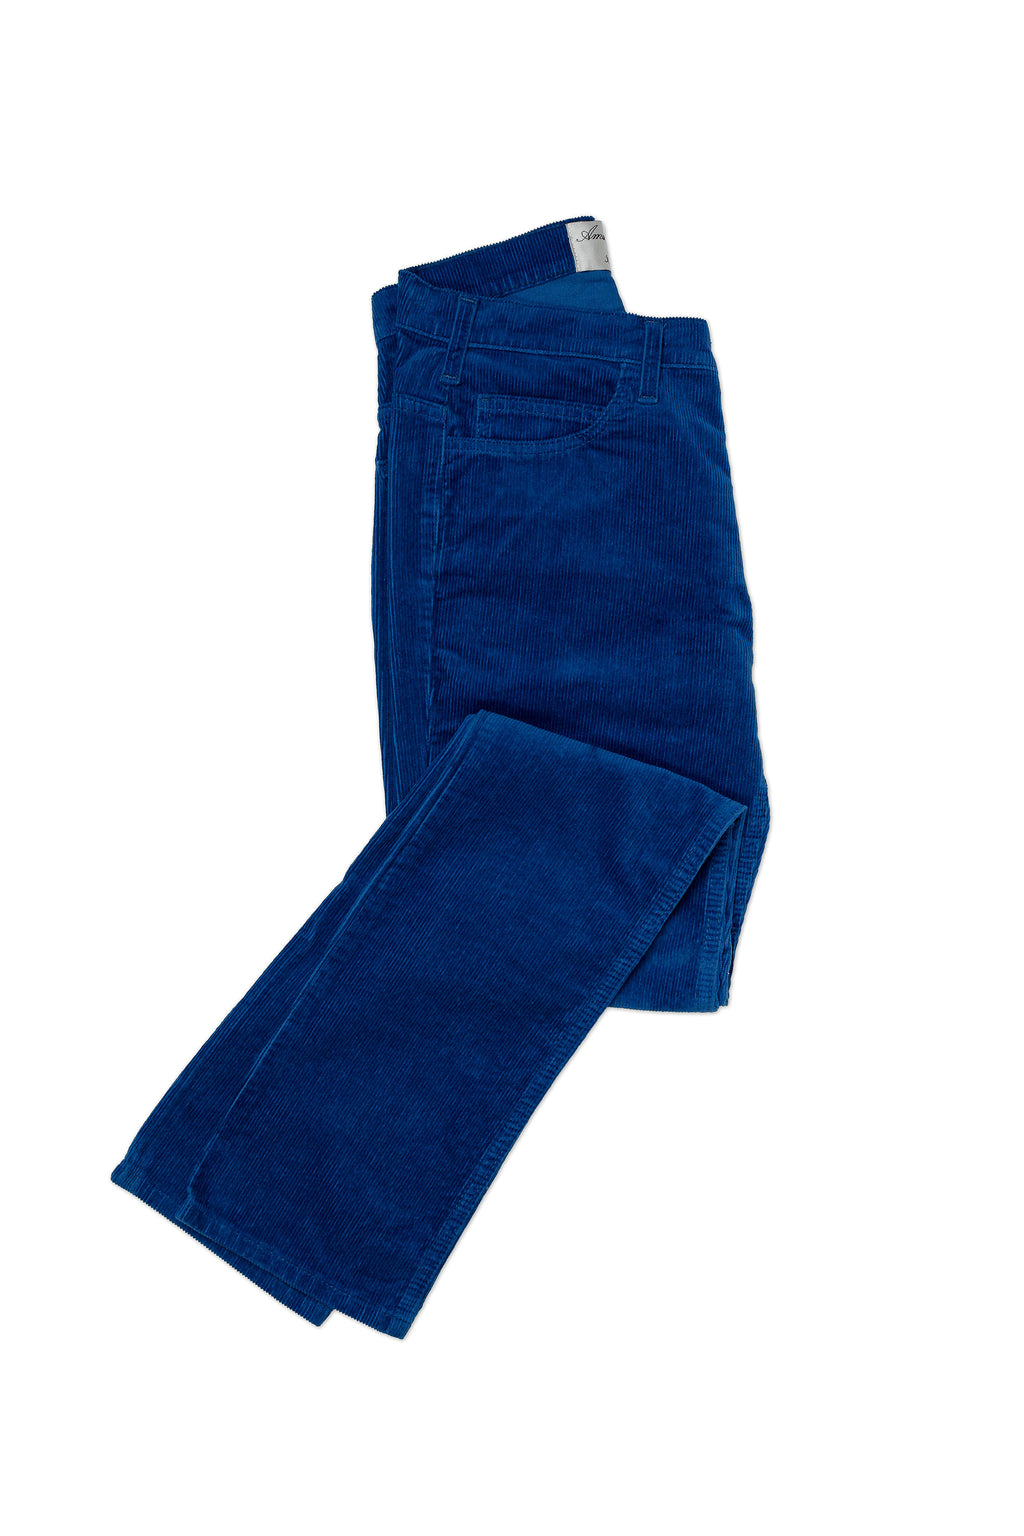 Photo studio pantalon velours côtelé bleu indigo